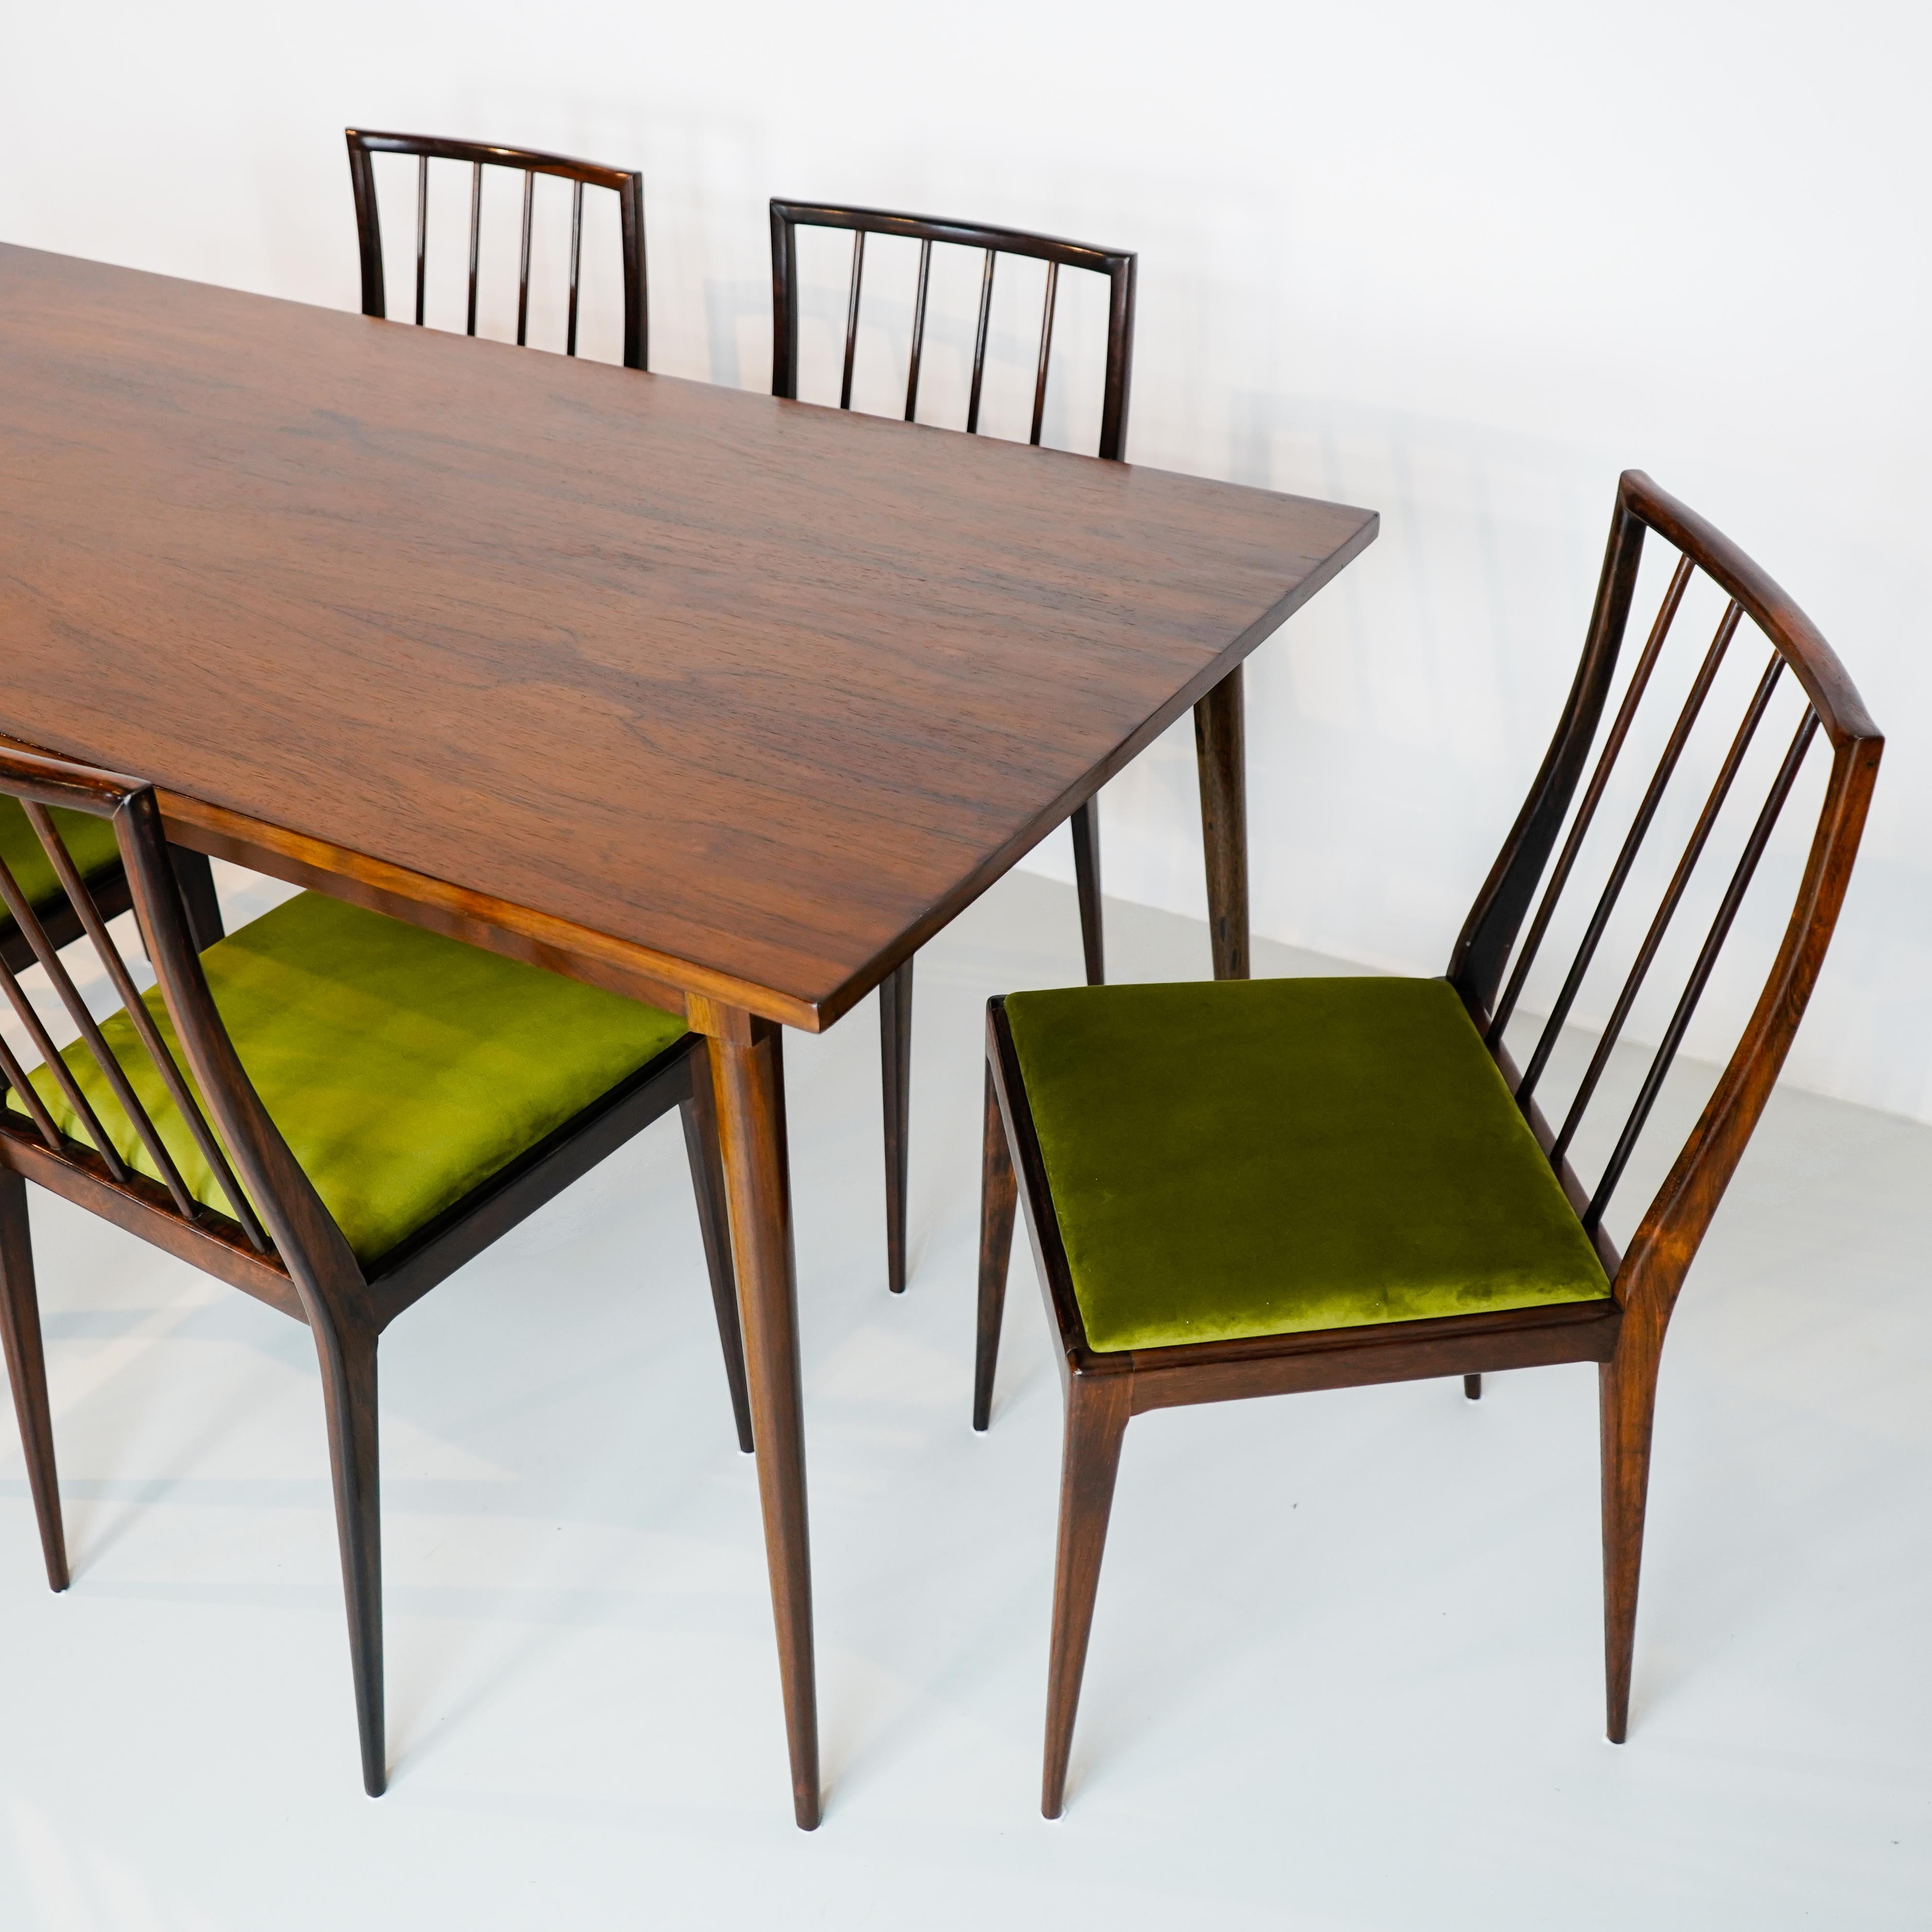 GB01 RIPAS - 6 chaises et table scellée en bois de rose, Geraldo de Barro Unilabor en vente 7